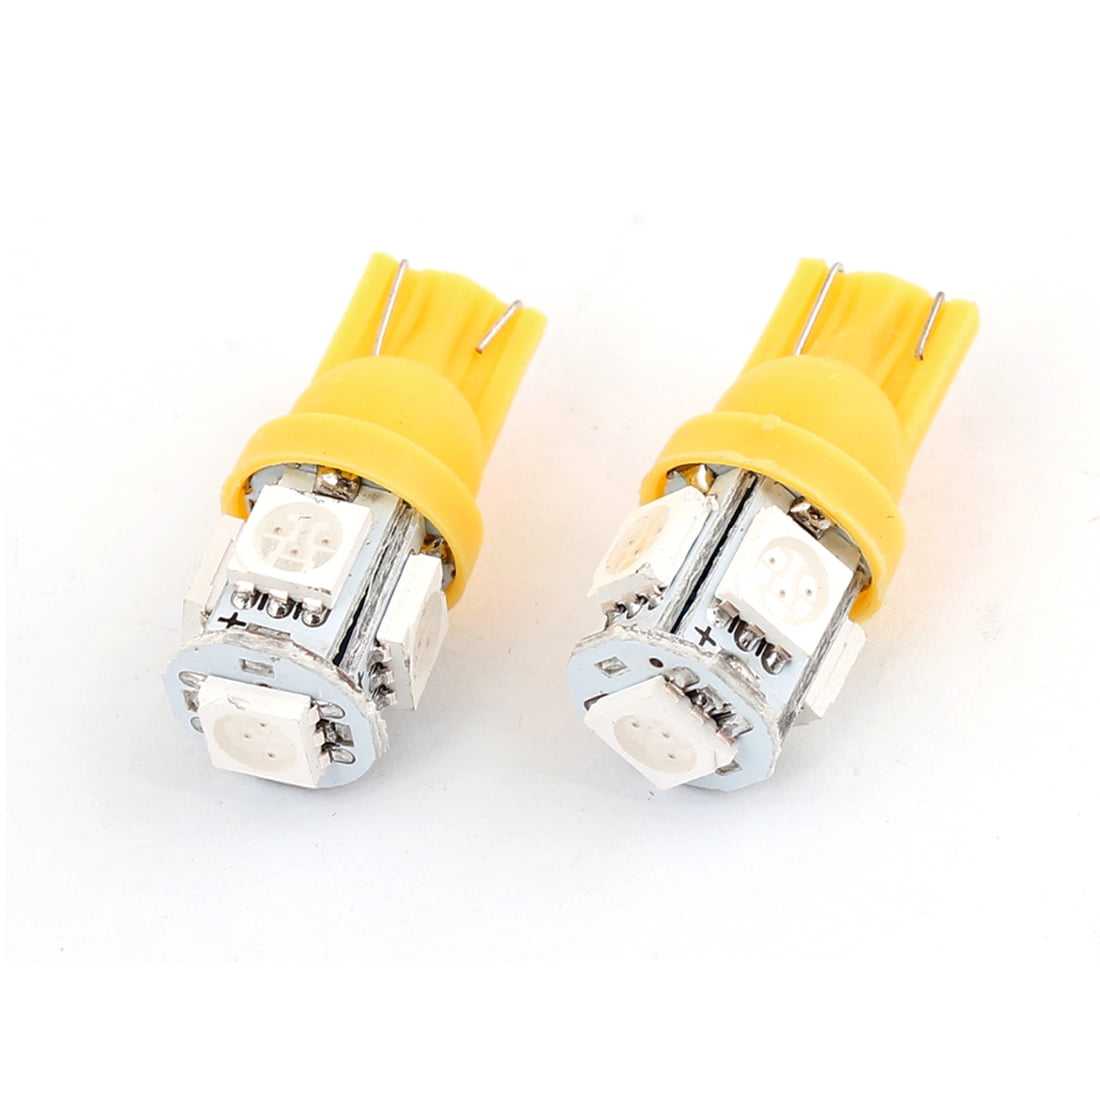 2PCS T10 194 168 W5W 5050 SMD 5 LEDs Bulbs Side Wedge Light Amber 